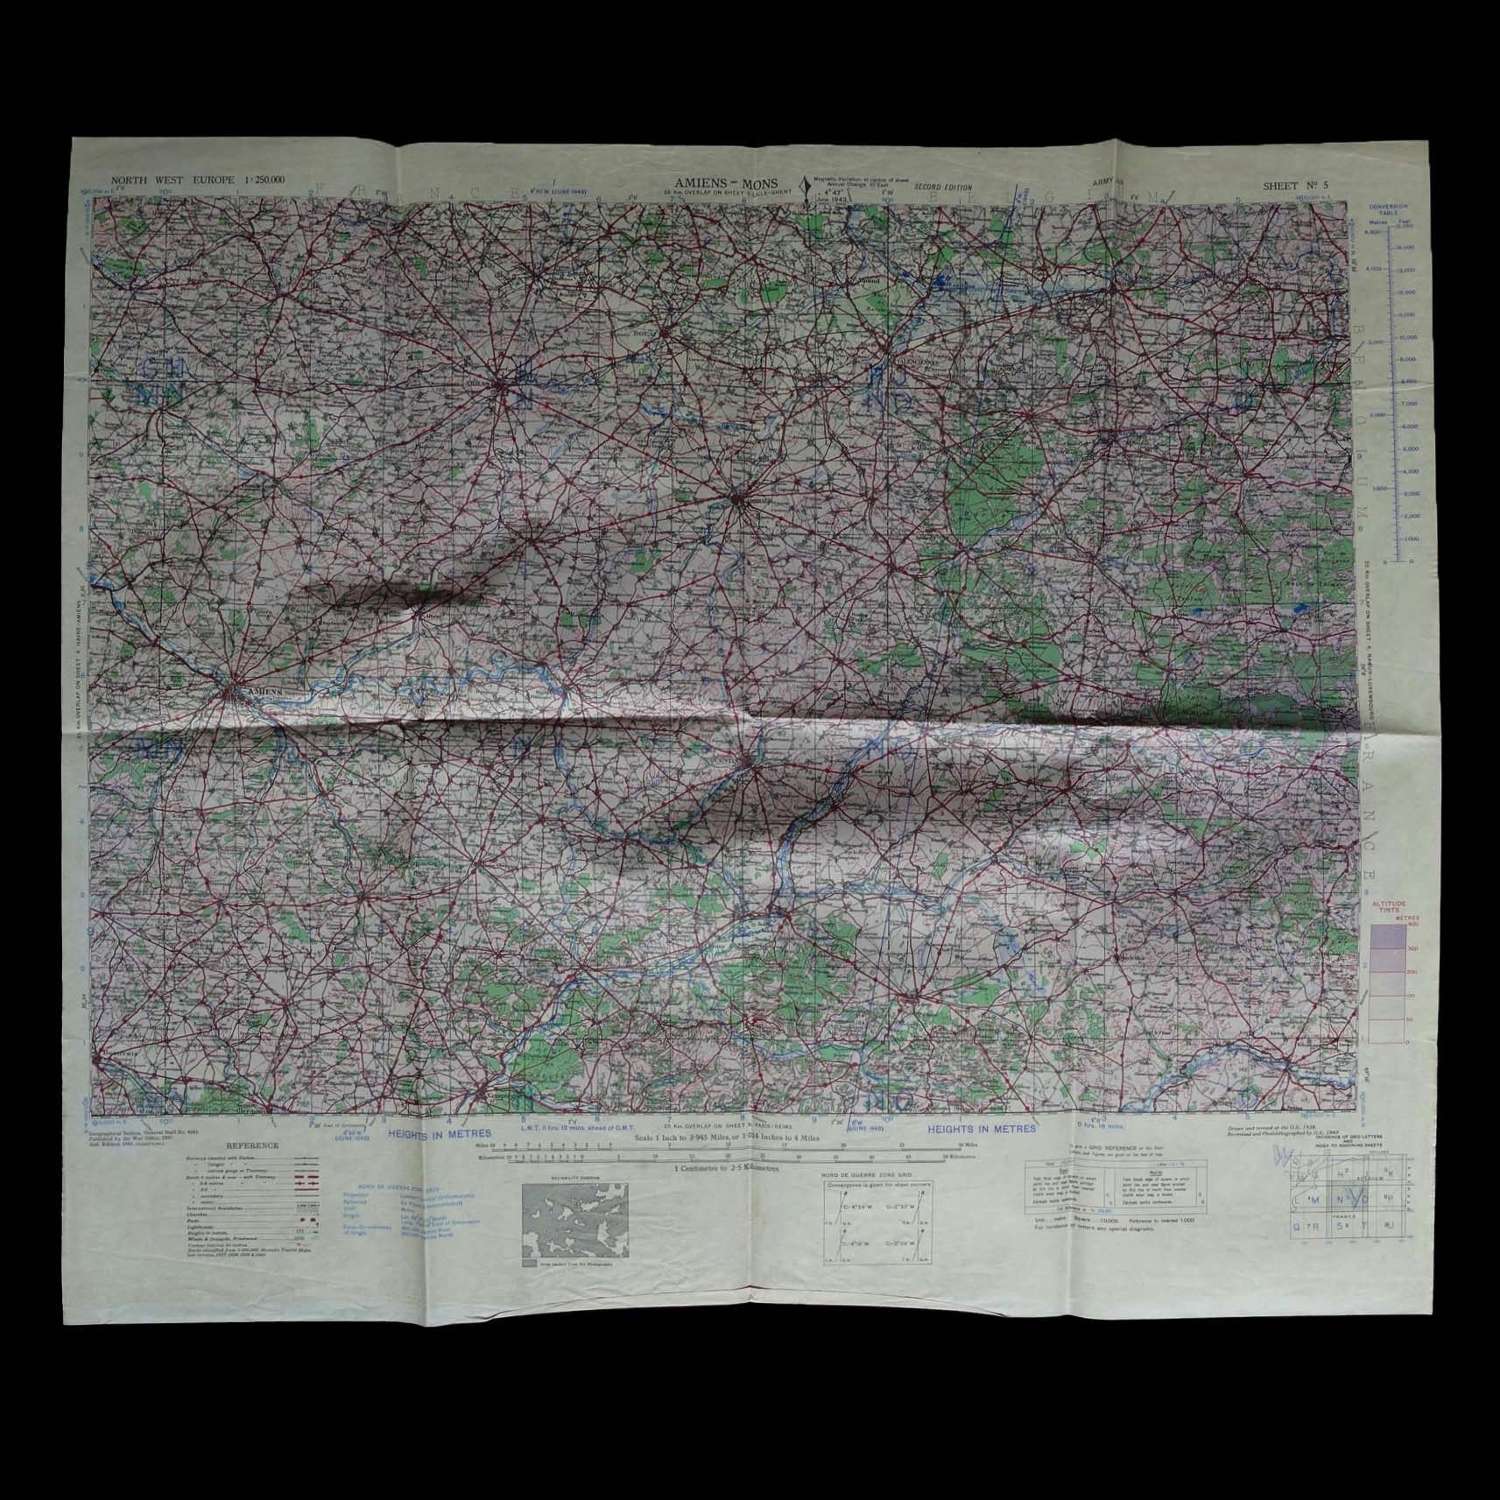 RAF flight map : Amiens - Mons, 1943